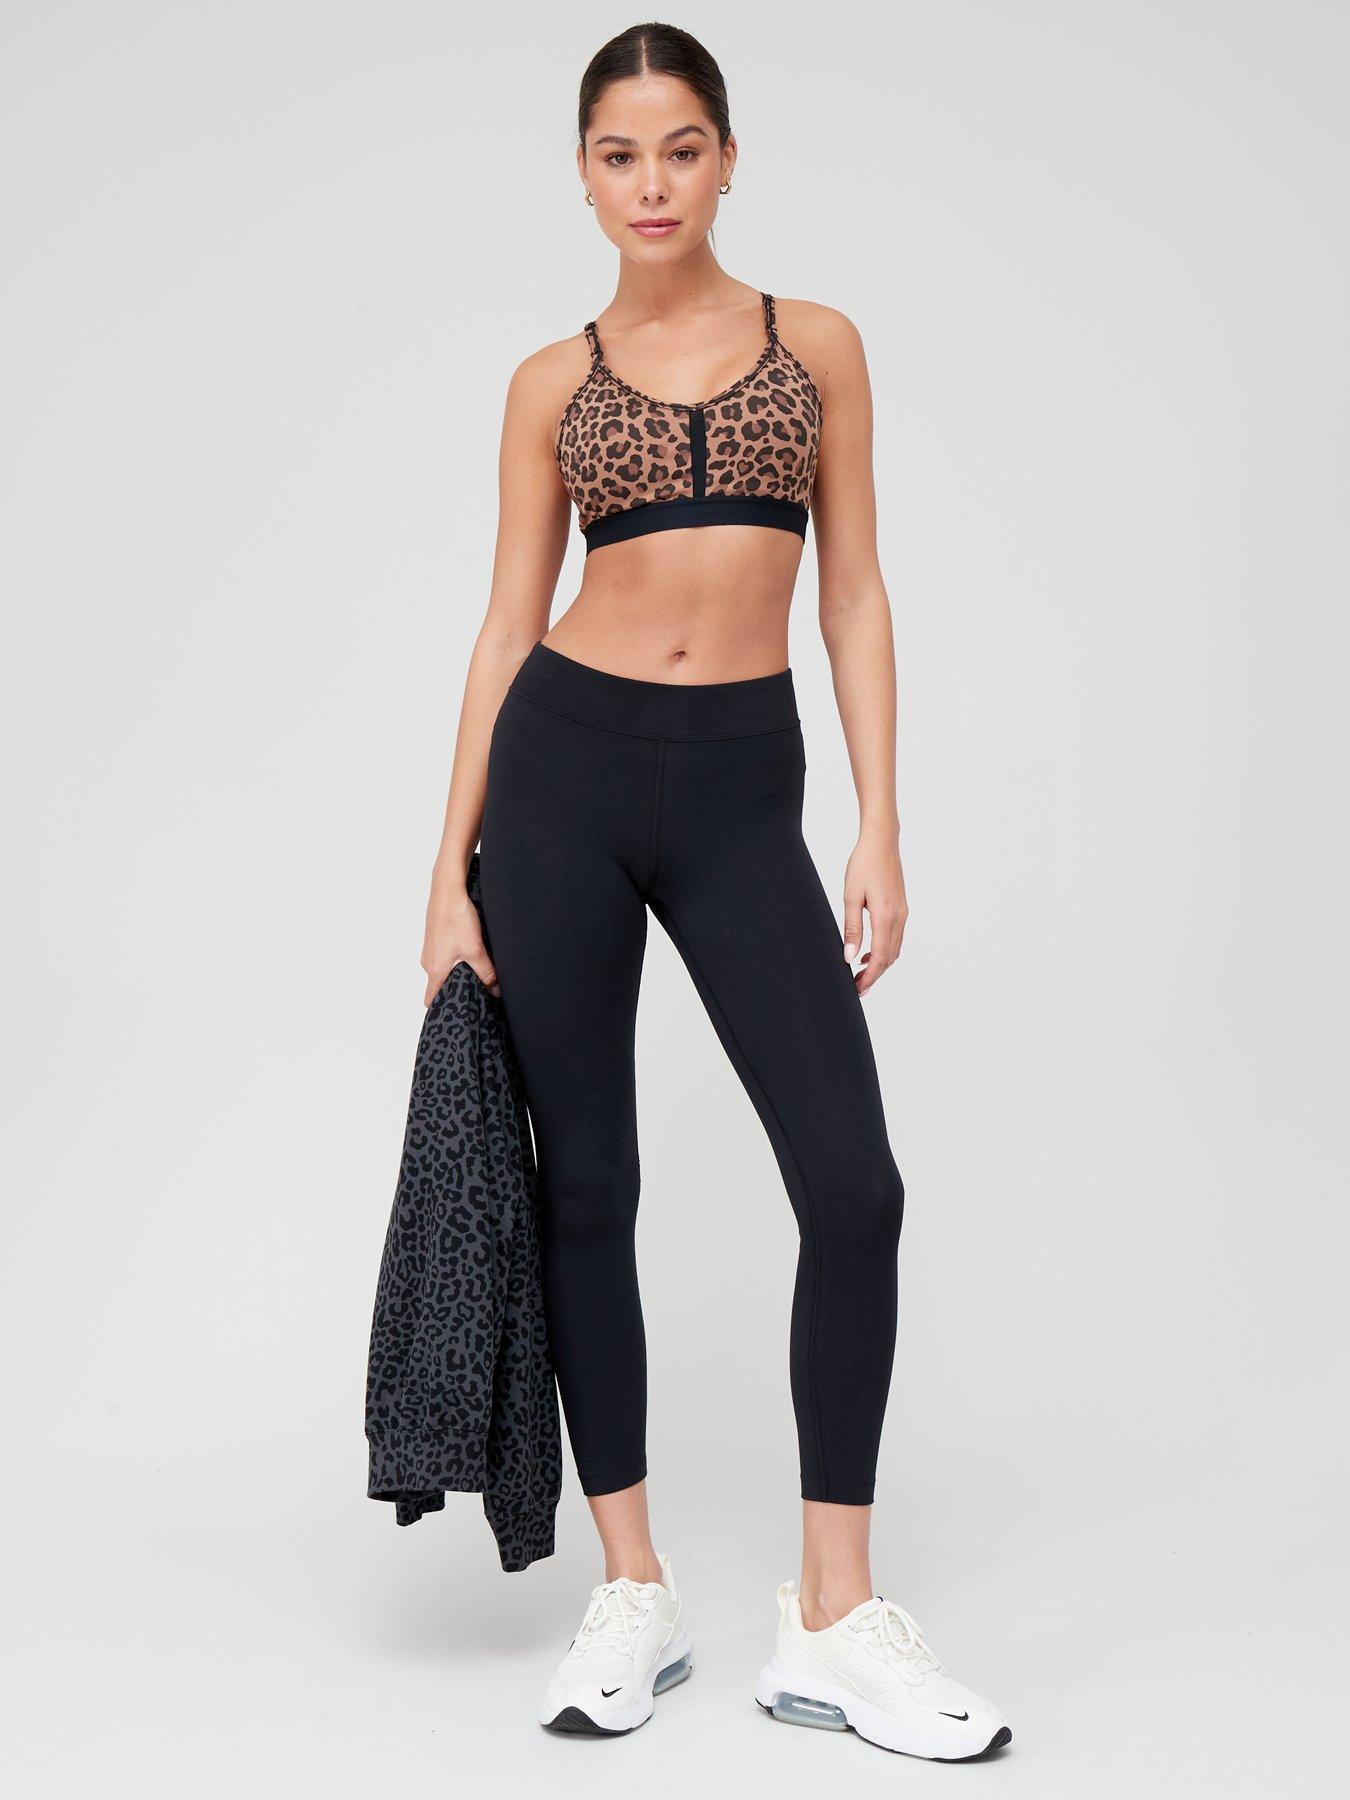 Nike pro leopard sports bra Athletic Active Workout yoga Dri-fit black XS